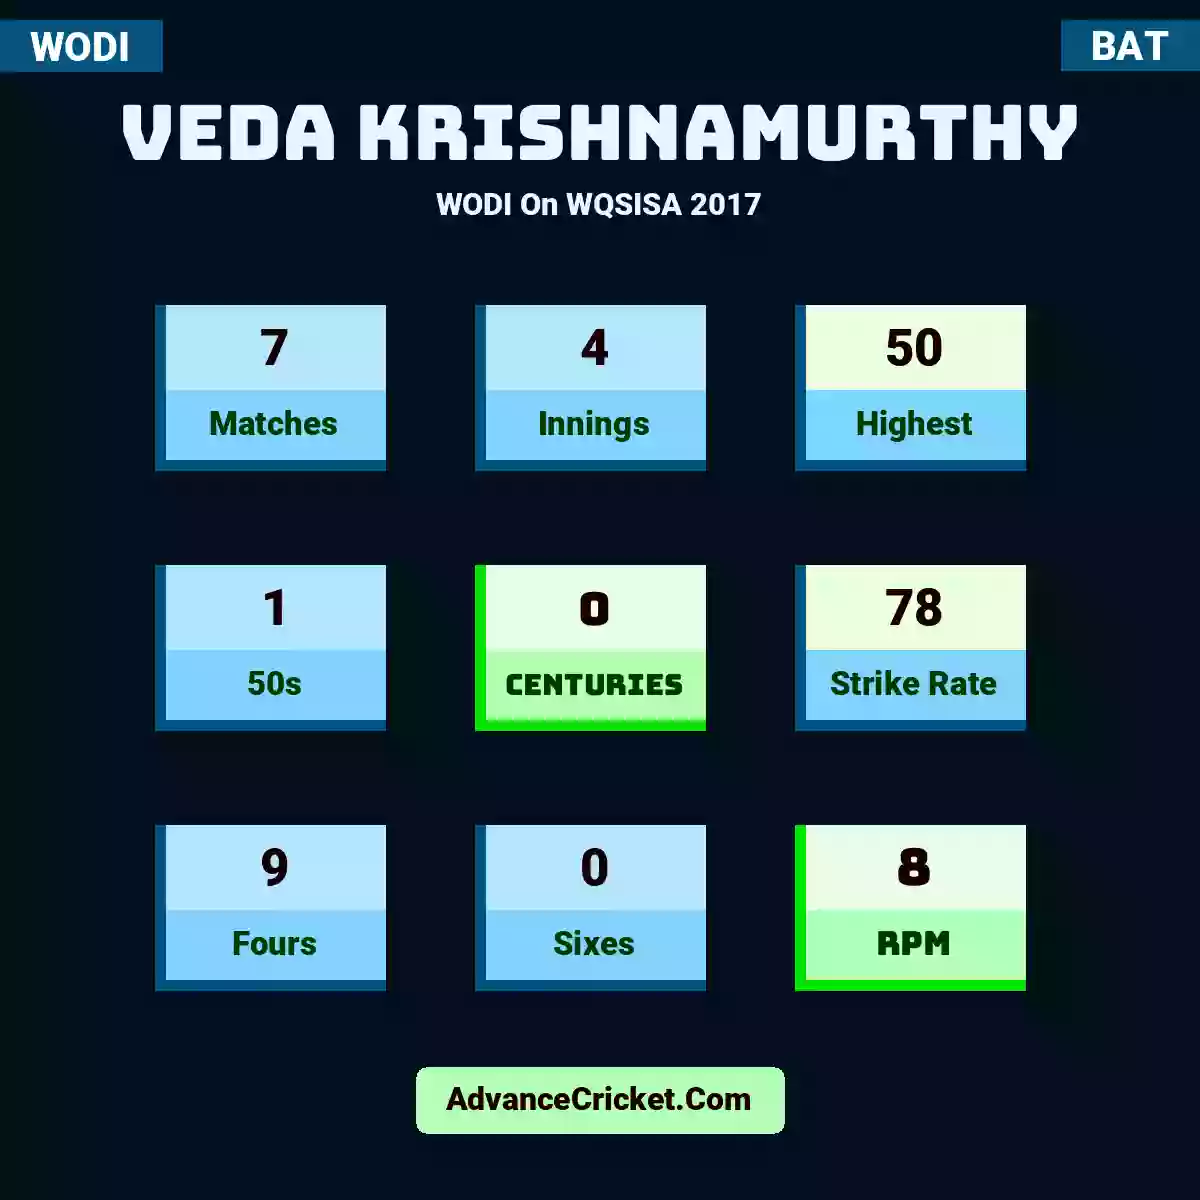 Veda Krishnamurthy WODI  On WQSISA 2017, Veda Krishnamurthy played 7 matches, scored 50 runs as highest, 1 half-centuries, and 0 centuries, with a strike rate of 78. V.Krishnamurthy hit 9 fours and 0 sixes, with an RPM of 8.